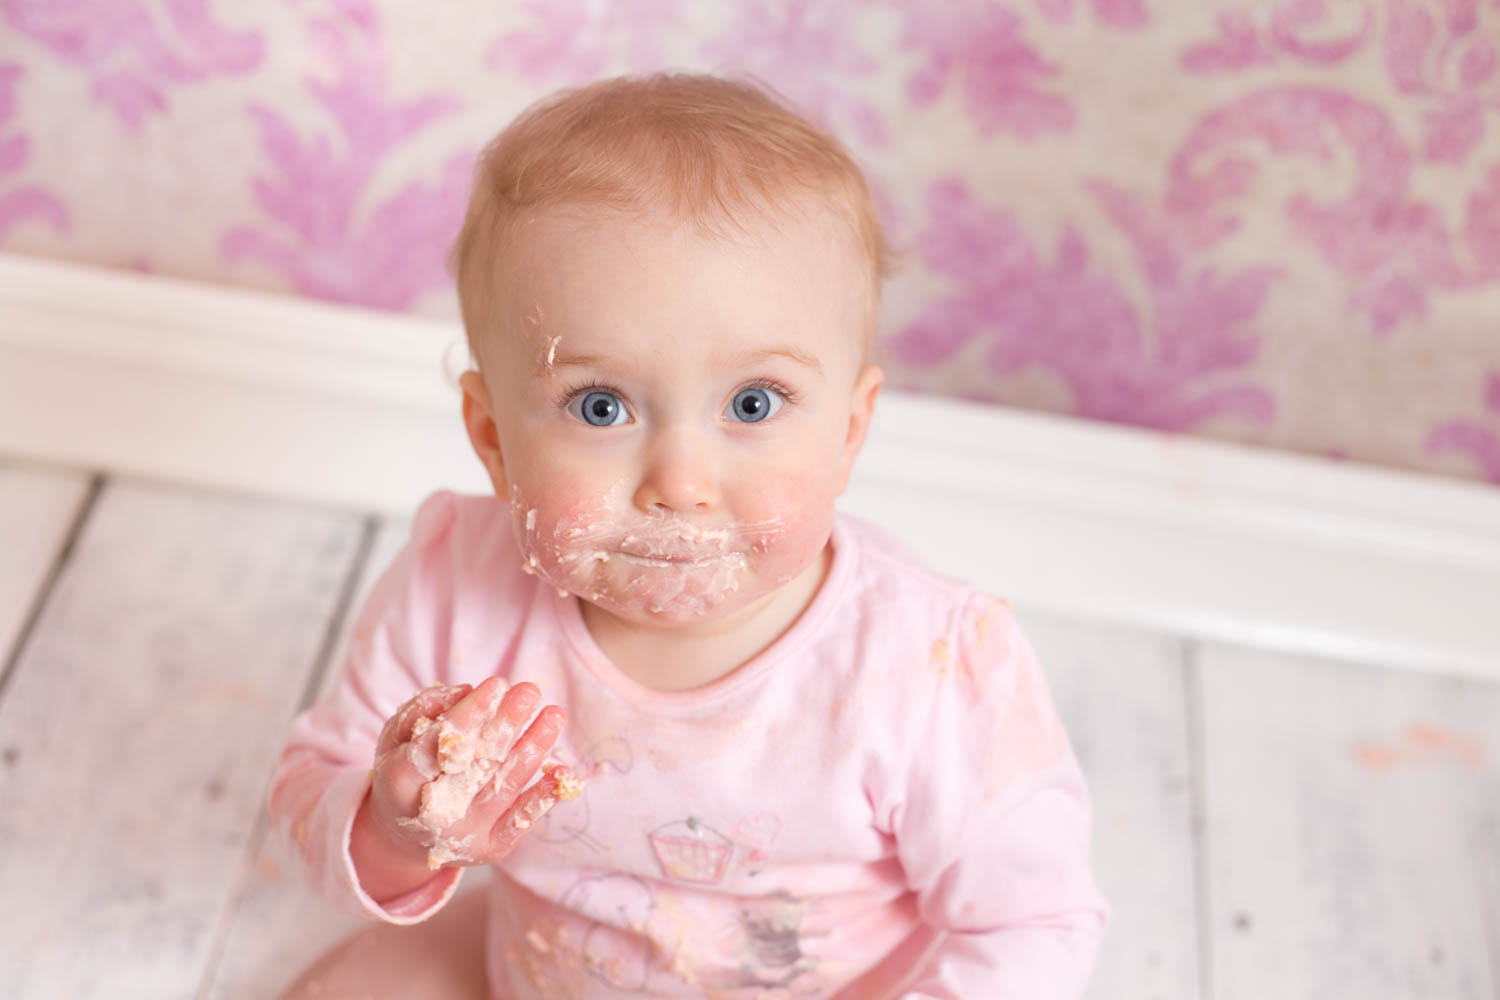 cake-smash-first-birthday-baby-photography-girl